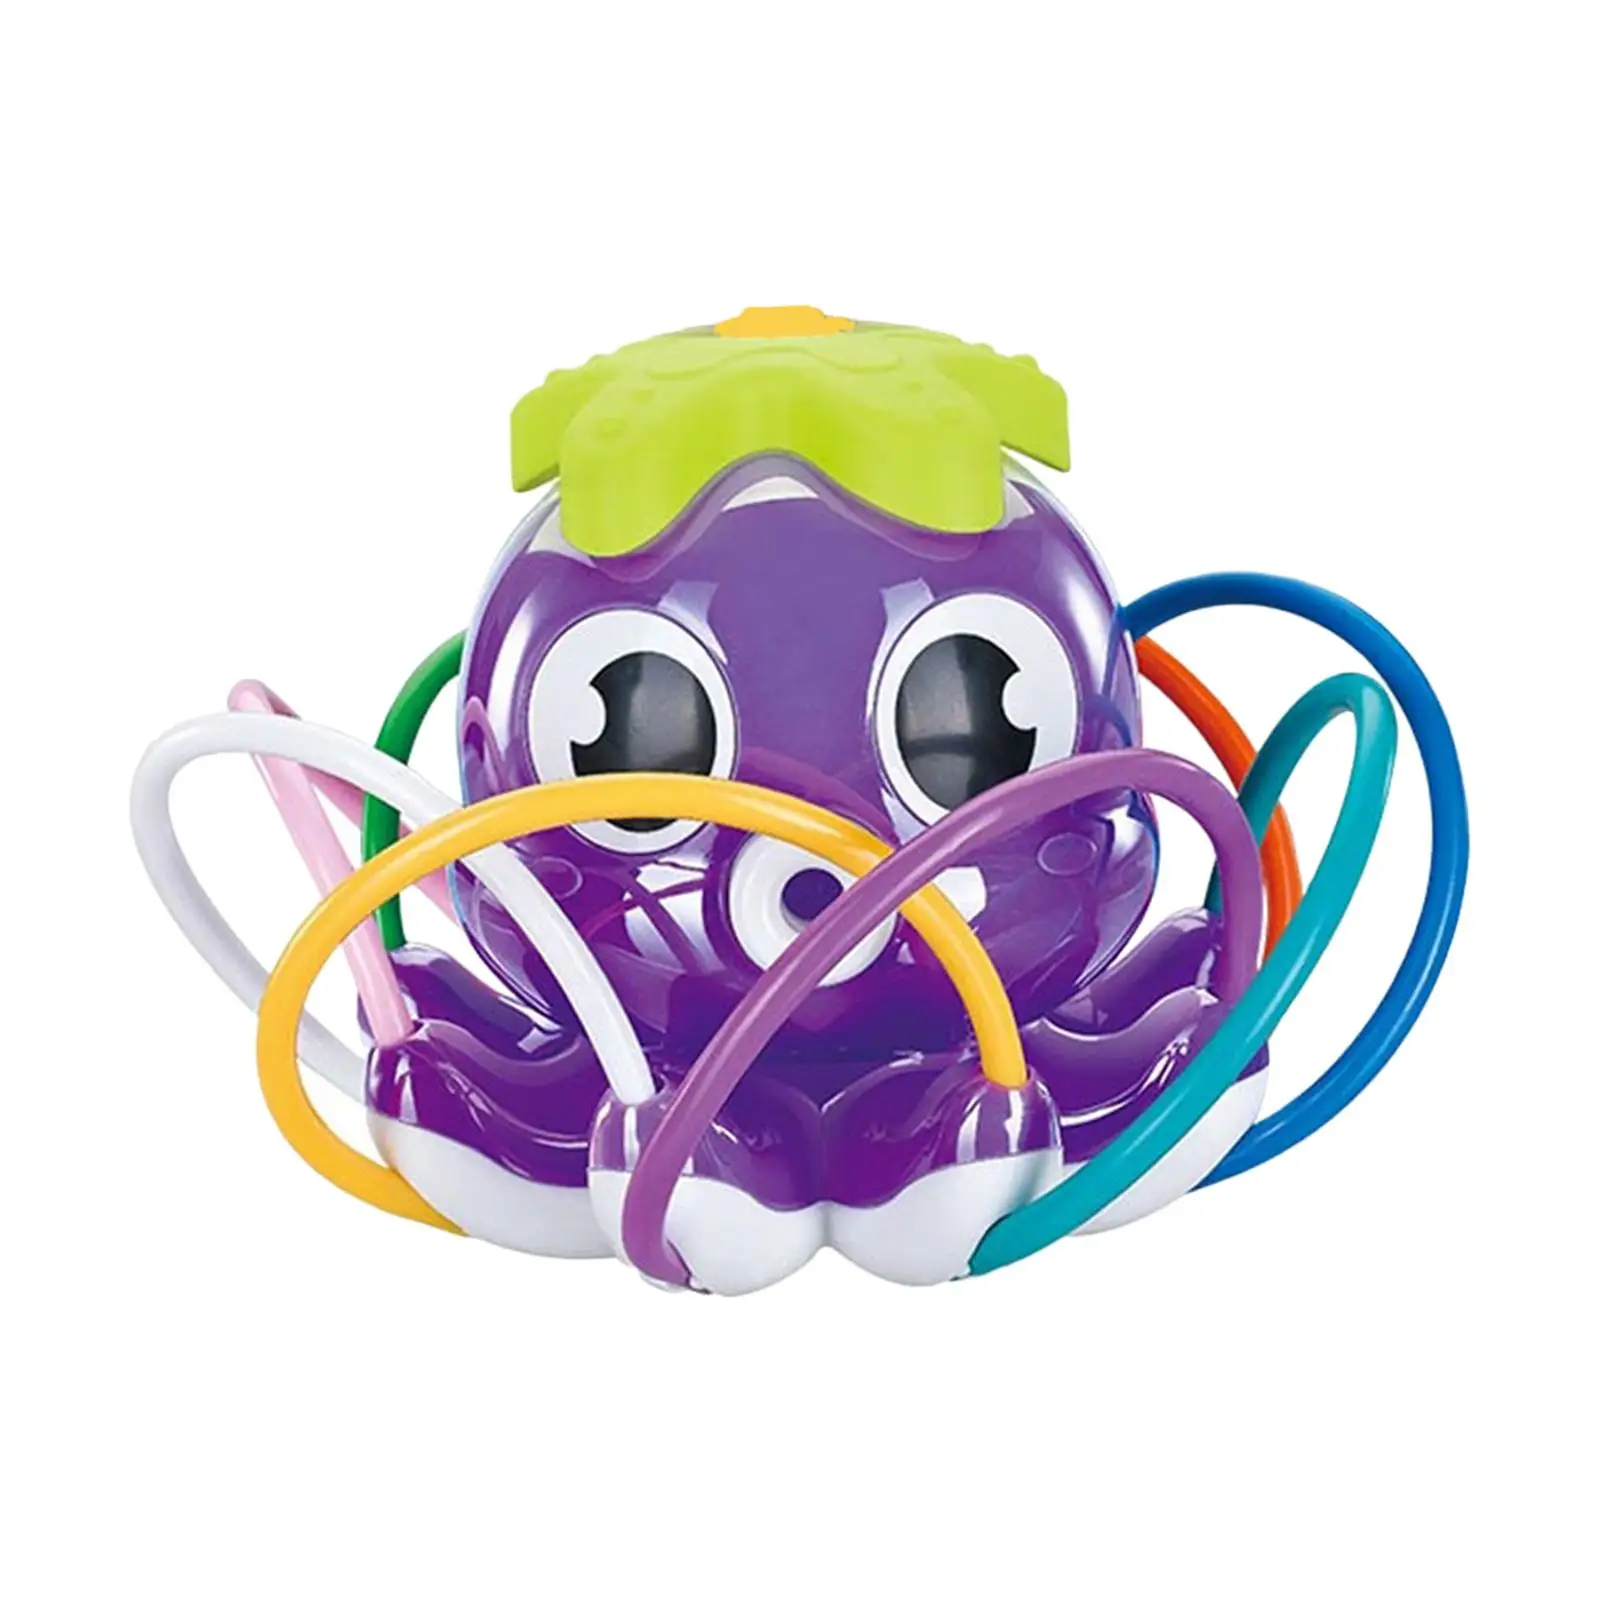 Octopus Sprinkler Outdoor Water Toy Water Splashing Fun Toy for Beach Pool